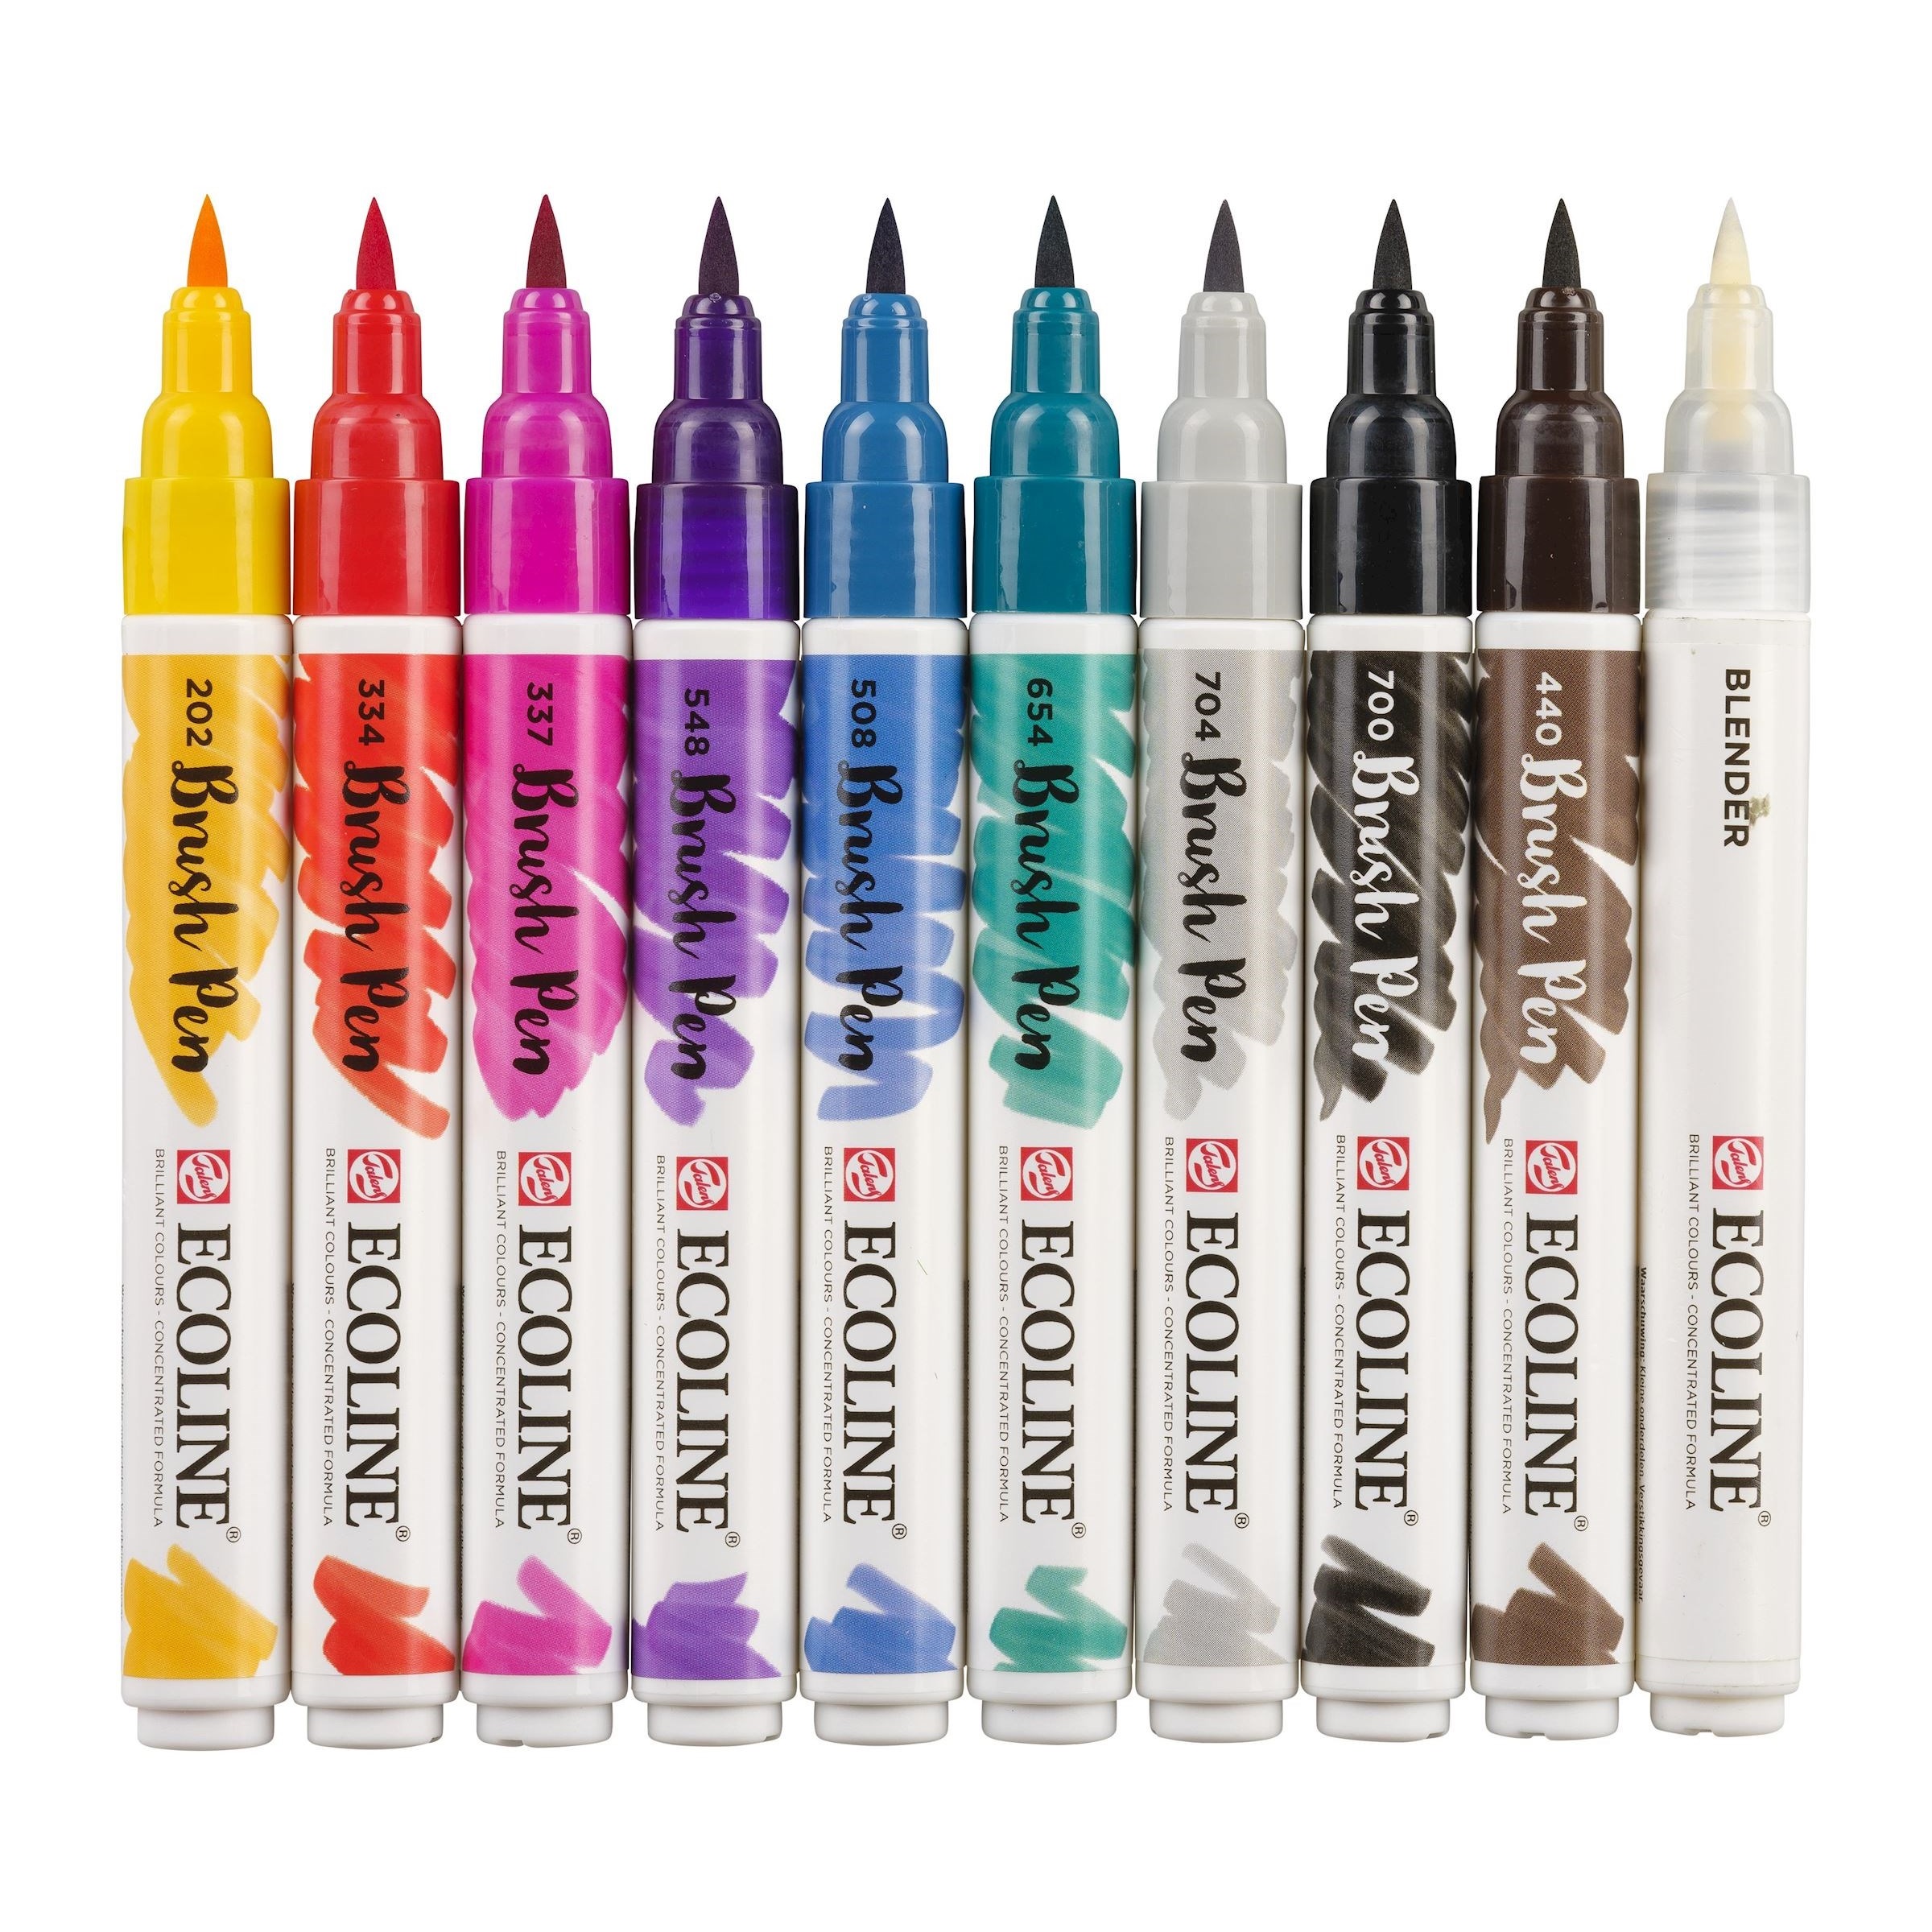 Pisaki pędzelkowe Ecoline Brush Pen Handletterin 9 kolorów + blender Royal Talens 11509800